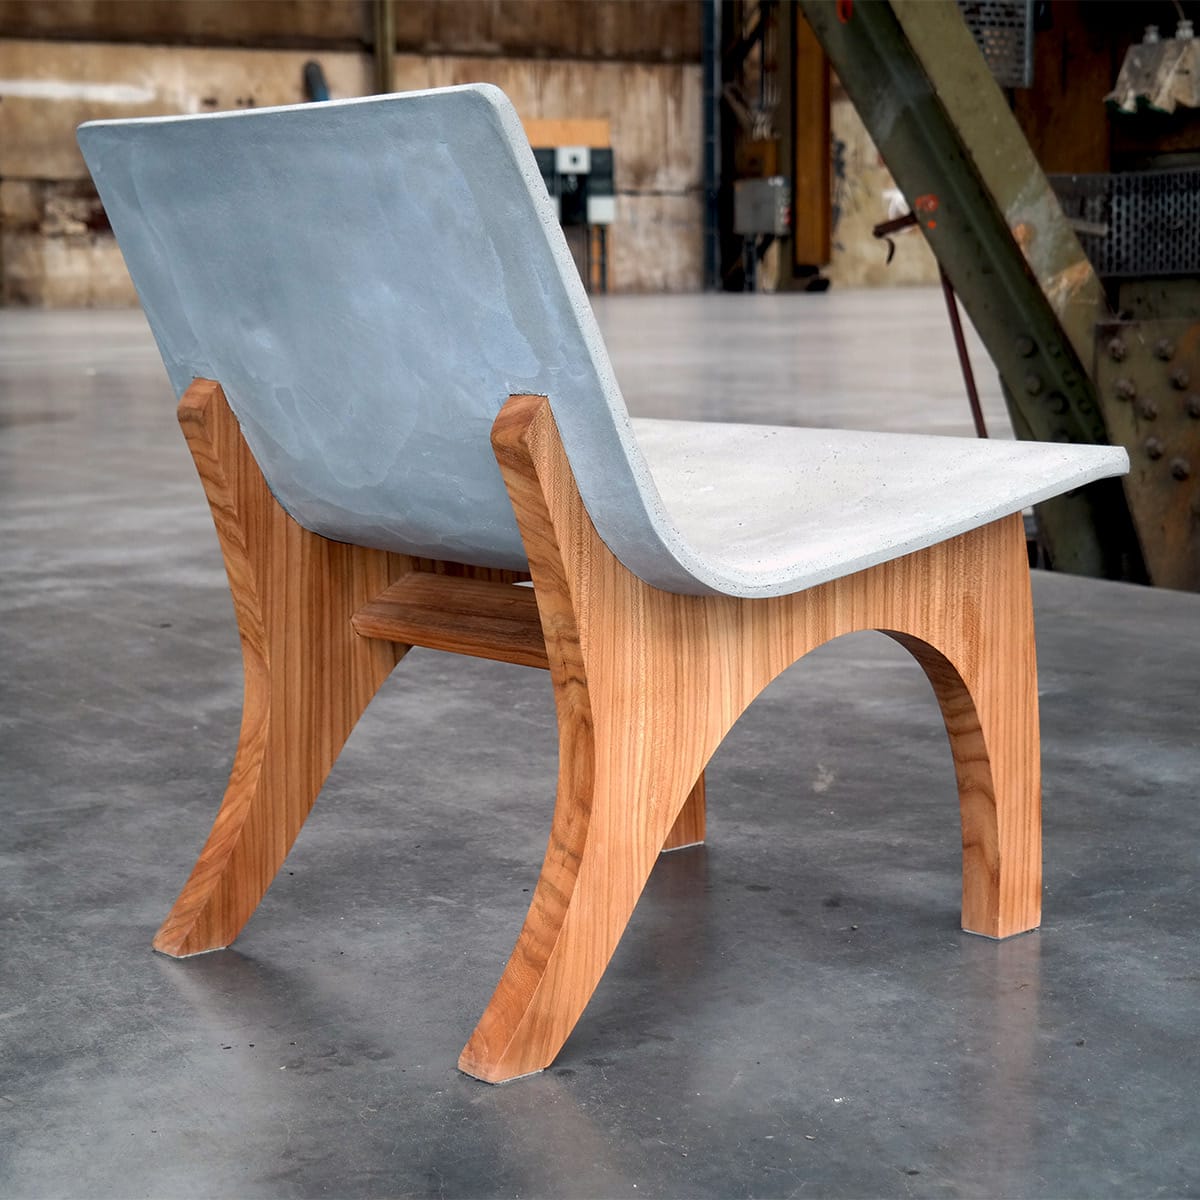 Morgan-concrete-chair-backside